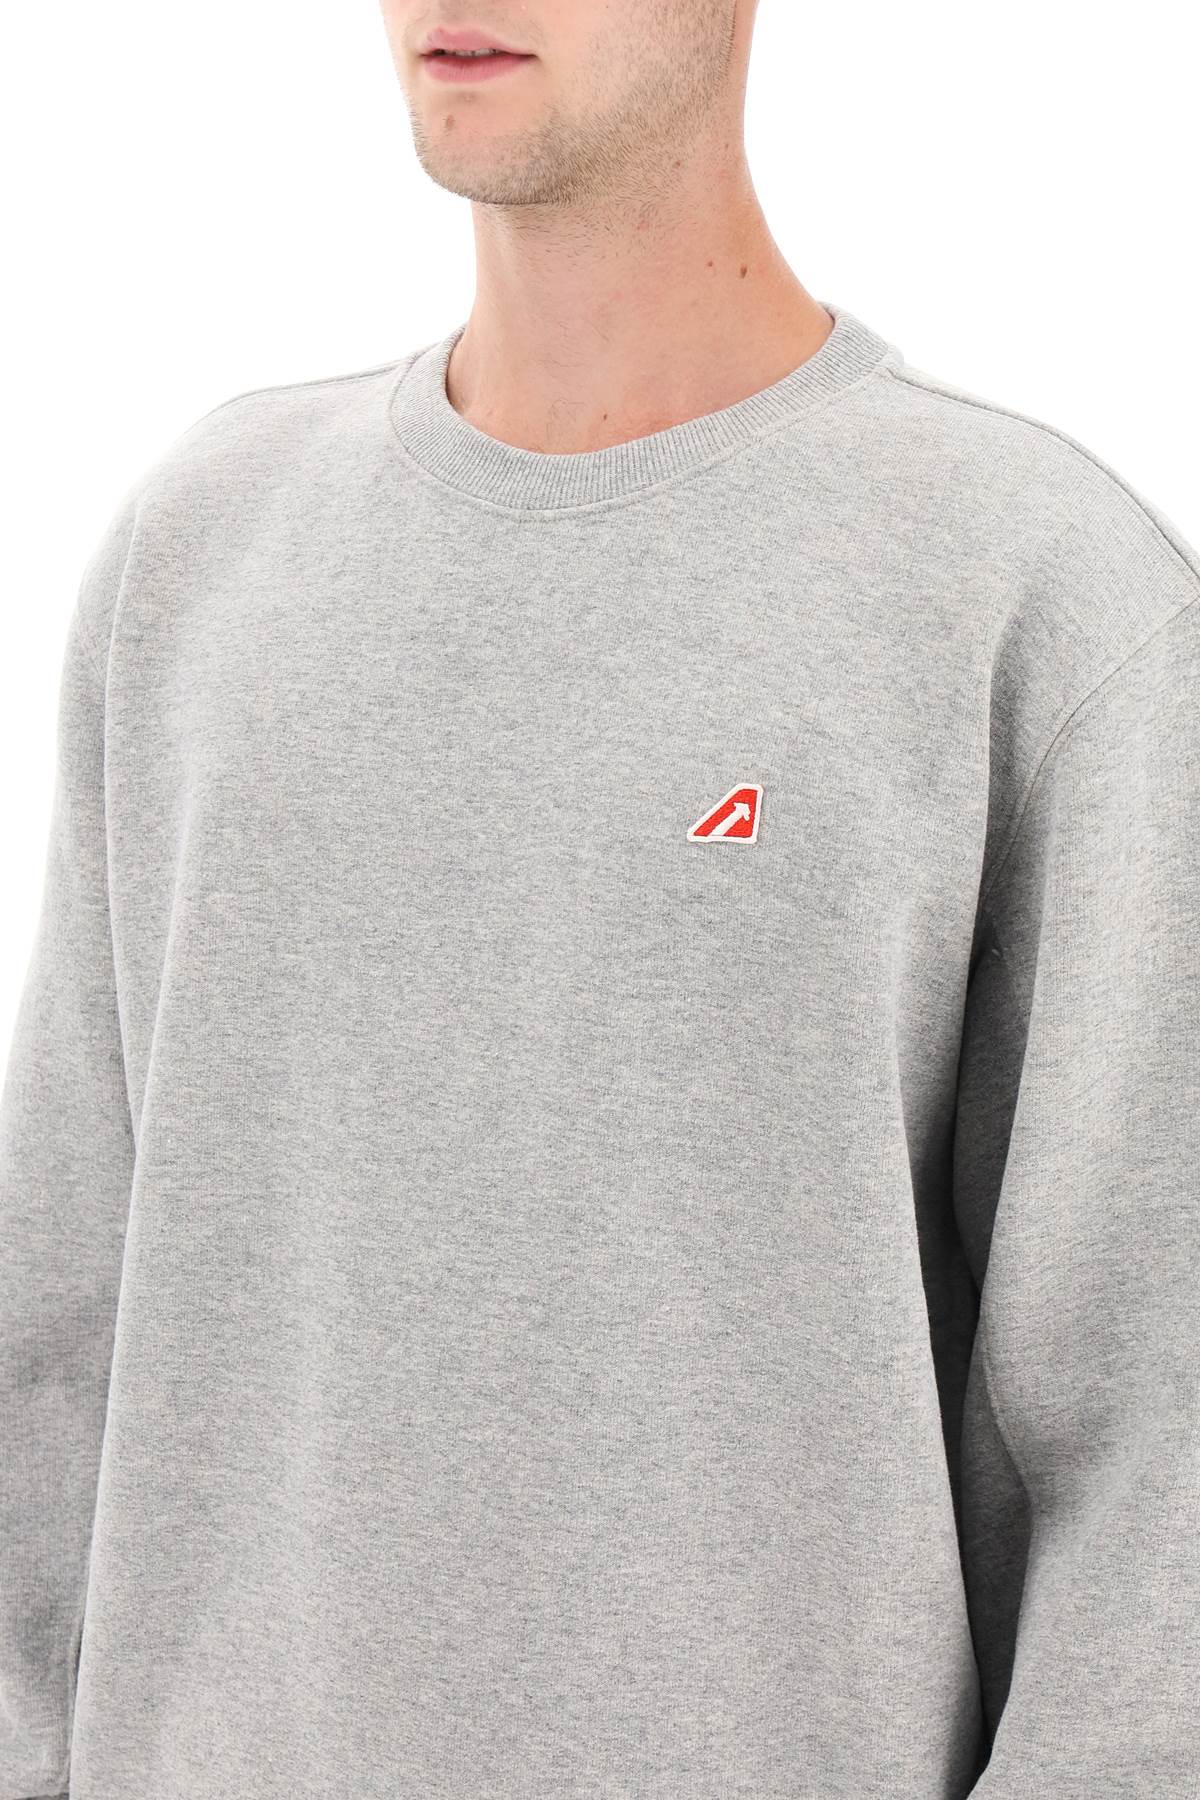 Autry Autry crew-neck sweatshirt with logo patch